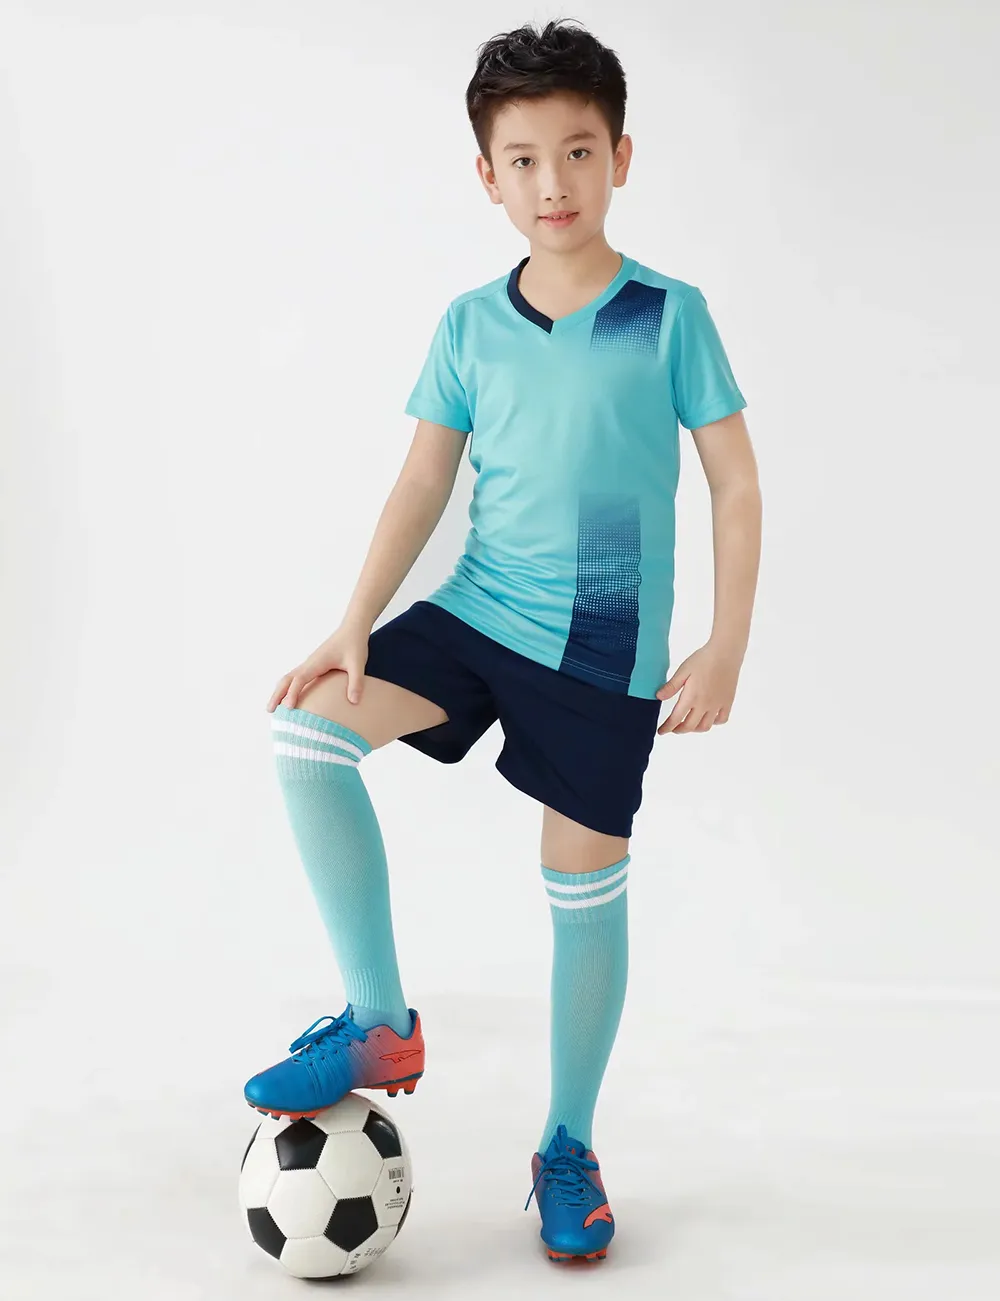 Jessie_kicks # G470 Aiir Foorce 1 Design 2021 Mode Maillots Enfants Vêtements Ourtdoor Sport